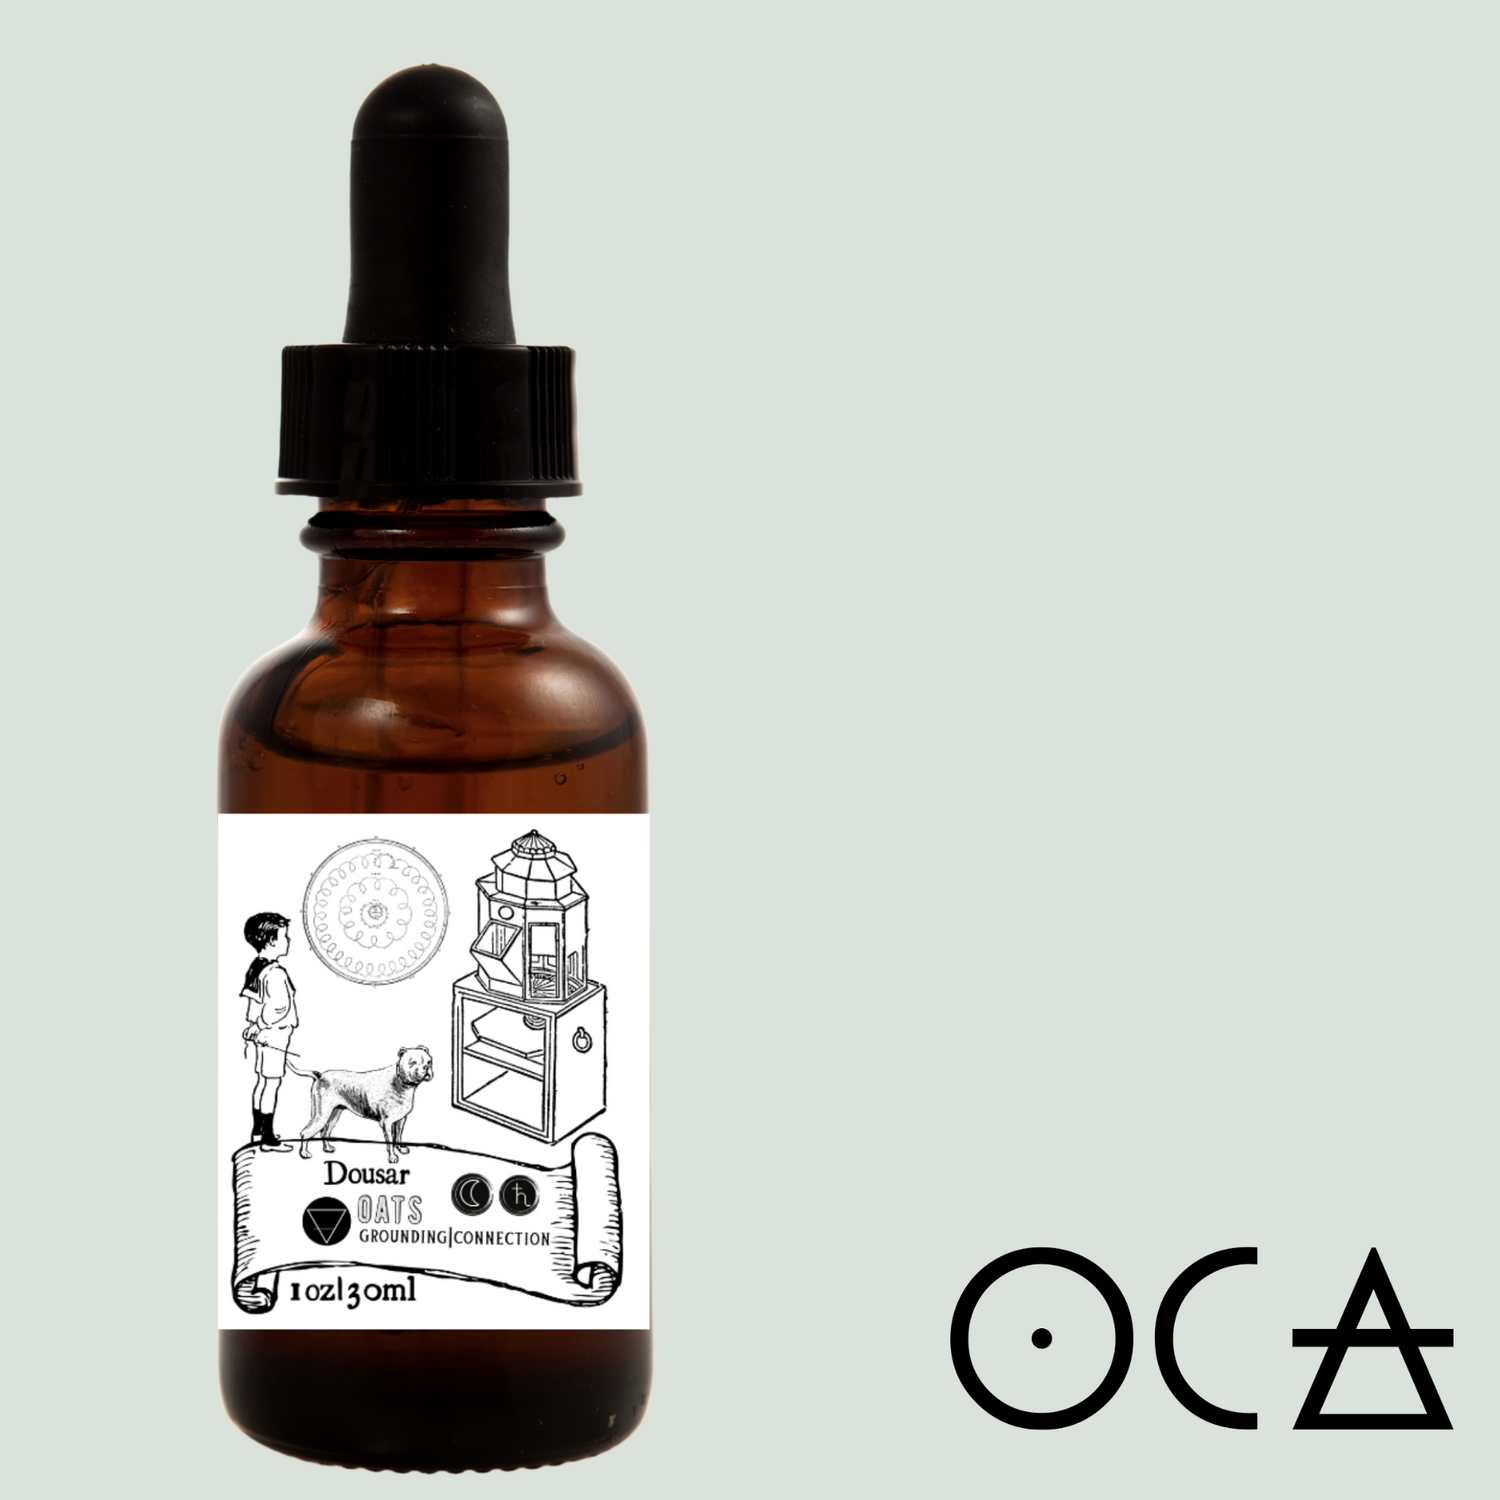 Oats (Dousar) Herbal Tincture - Original City Apothecary